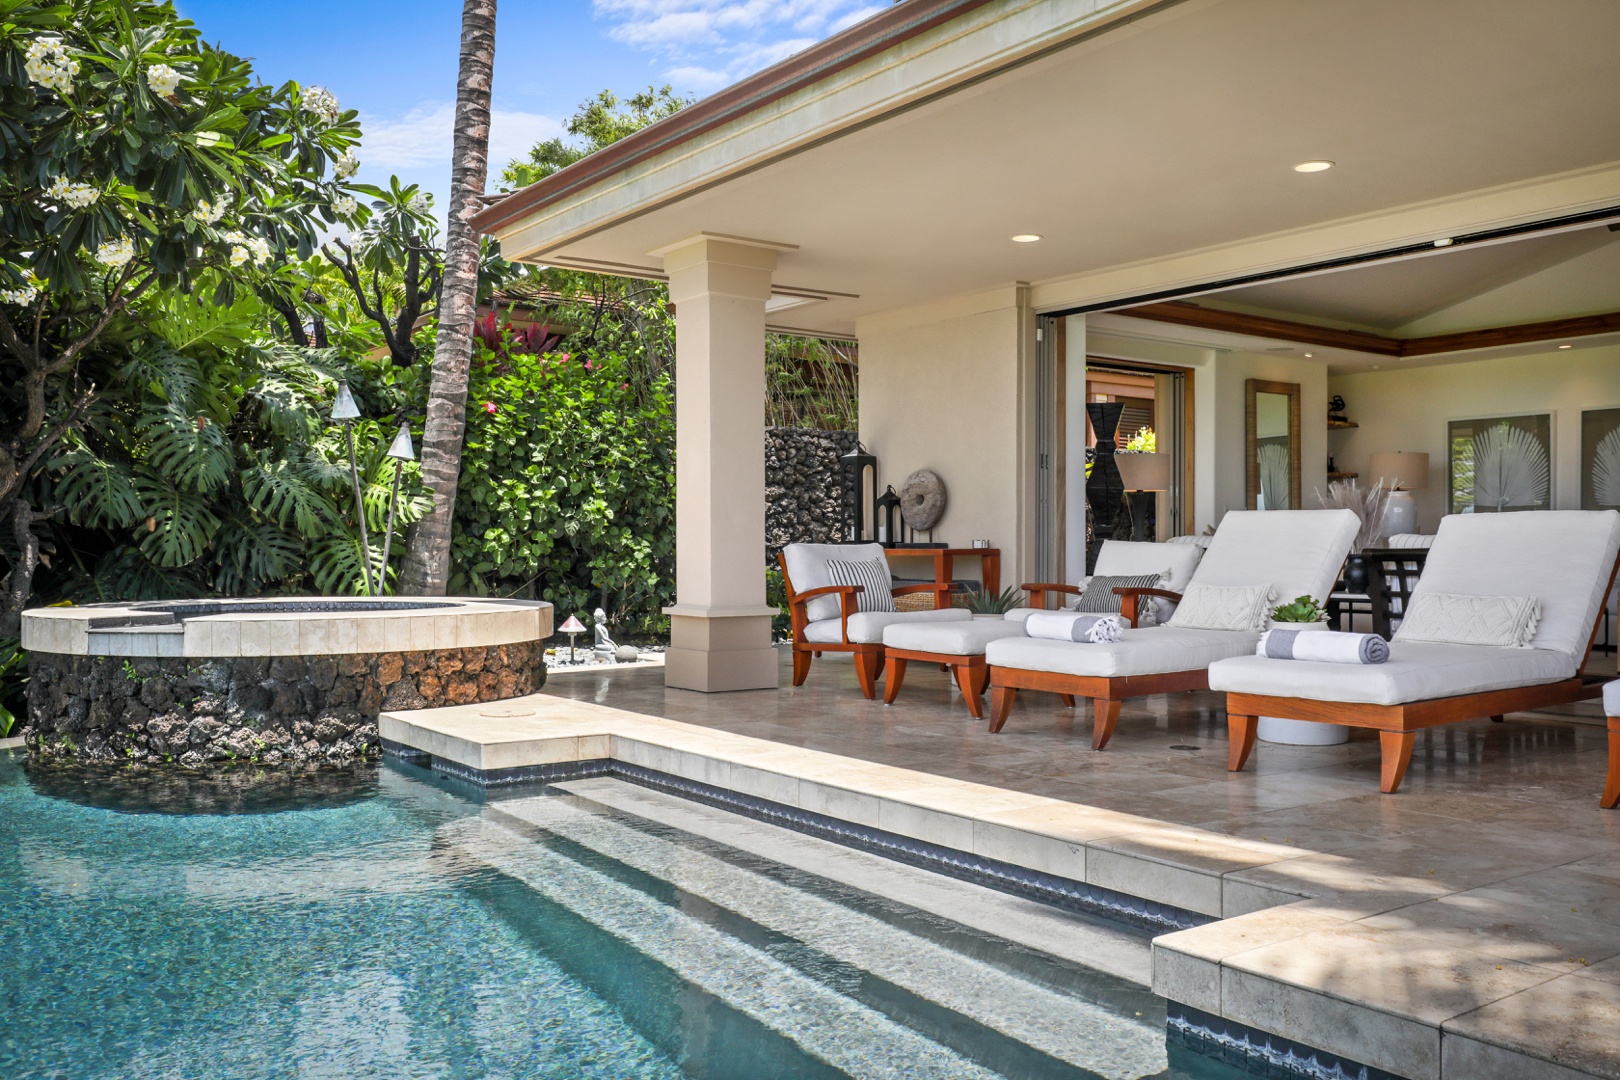 Kailua Kona Vacation Rentals, 4BD Pakui Street (147) Estate Home at Four Seasons Resort at Hualalai - Stairs into the private pool.